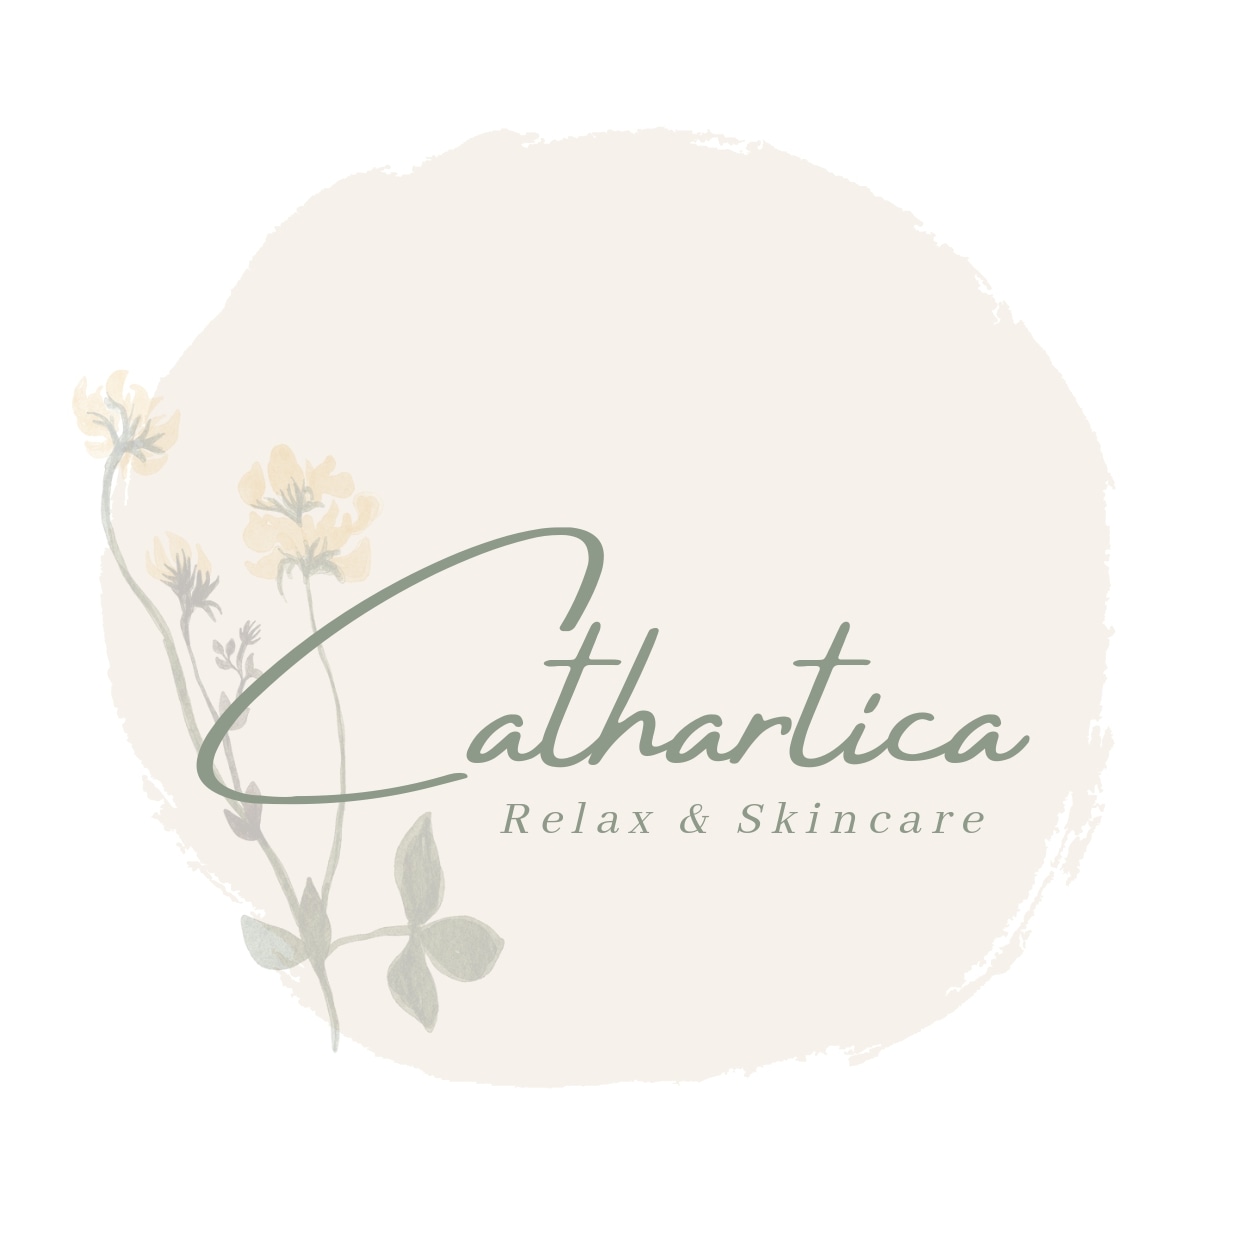 Cathartica